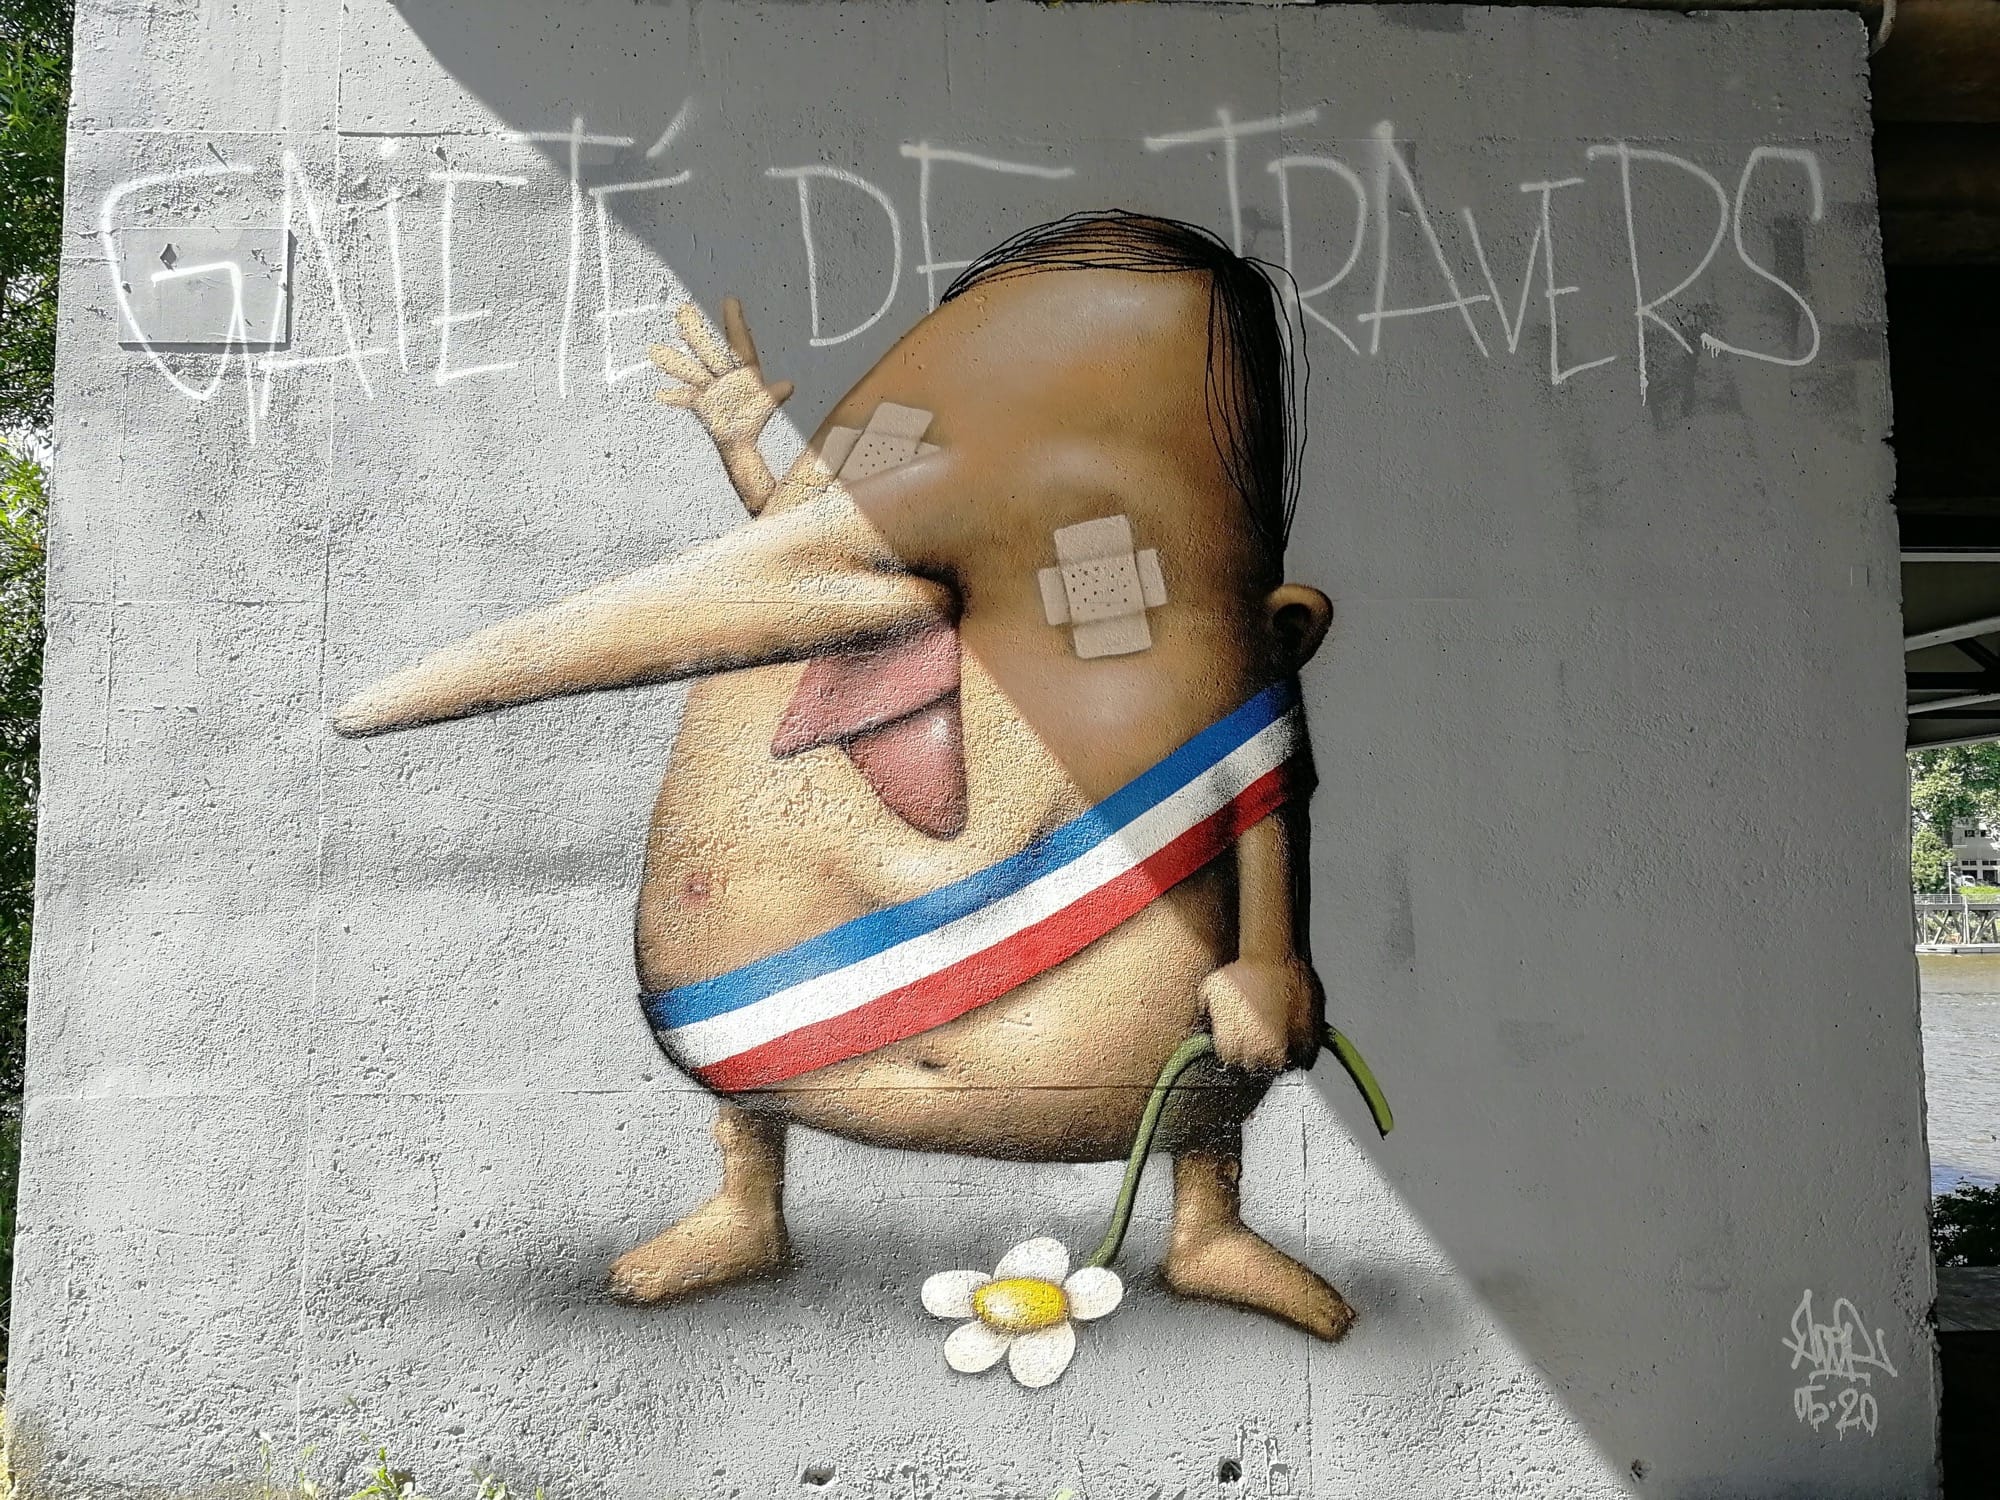 Graffiti 4152 Gaité de travers by the artist Ador captured by Rabot in Nantes France